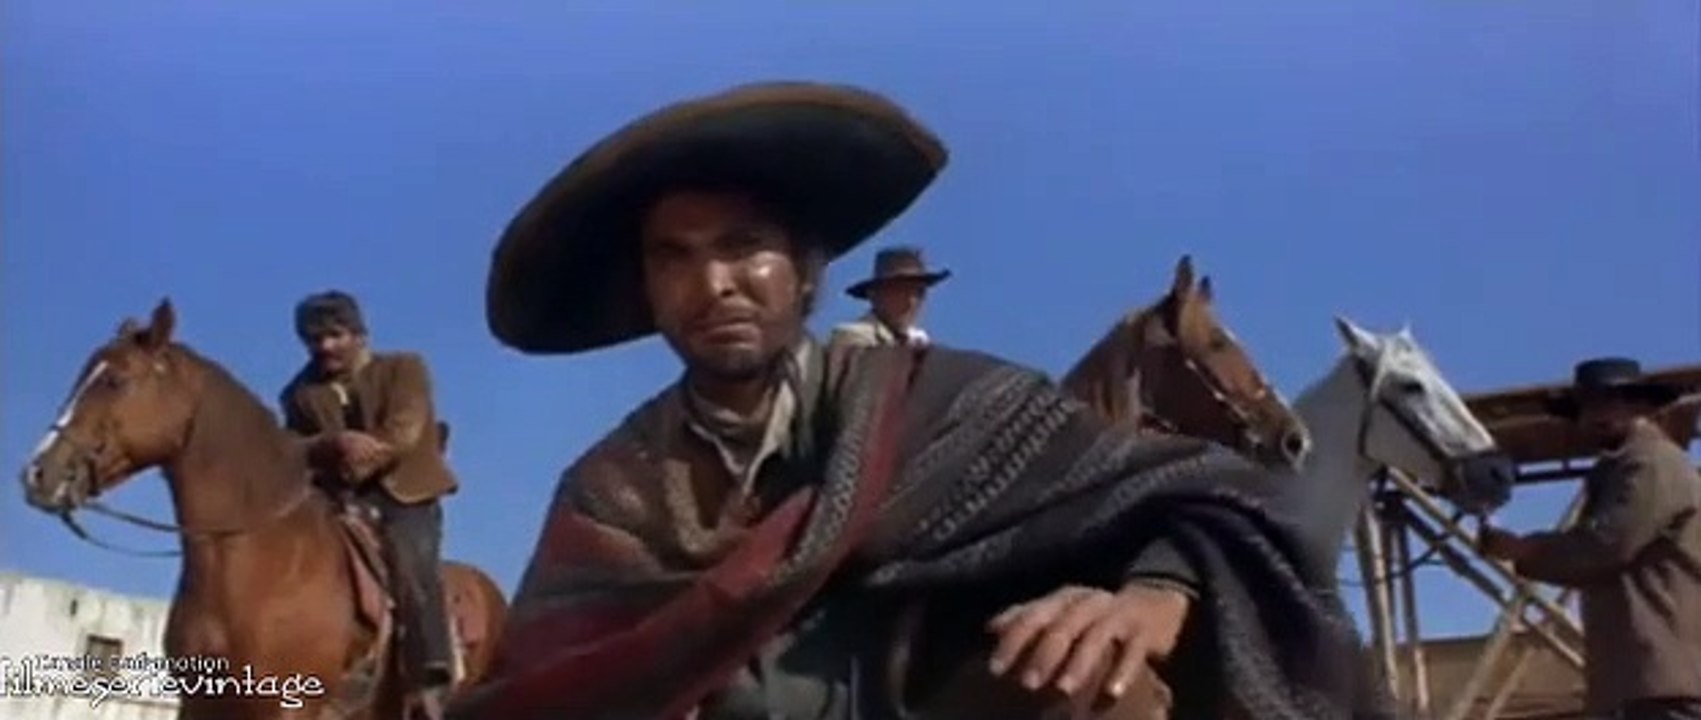 LEE VAN CLEEF - DA UOMO A UOMO (film western) 2 tempo / Film e Serie  Vintage - Video Dailymotion